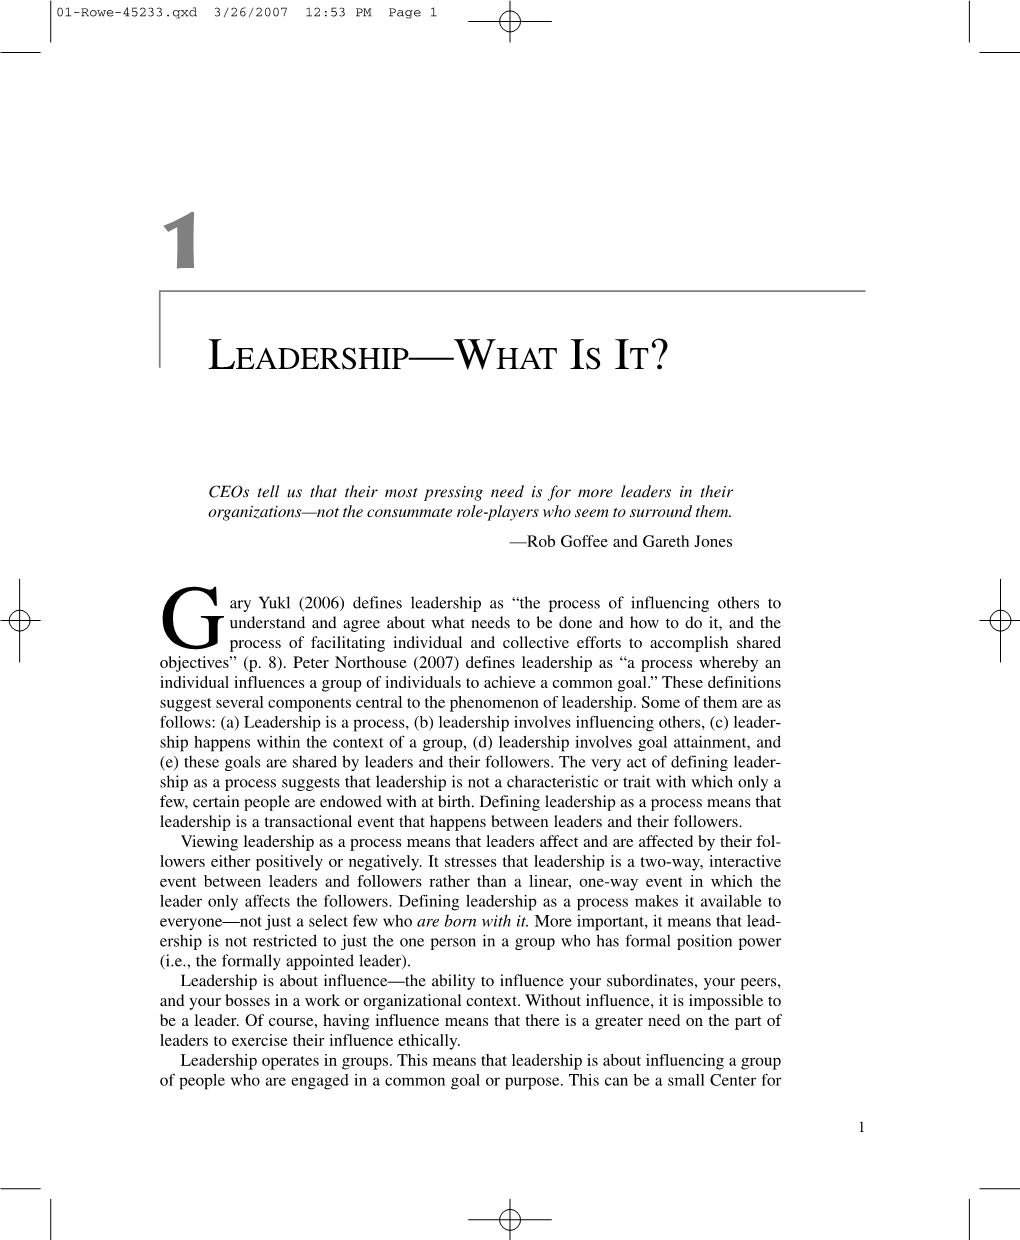 Leadership—What Is It?